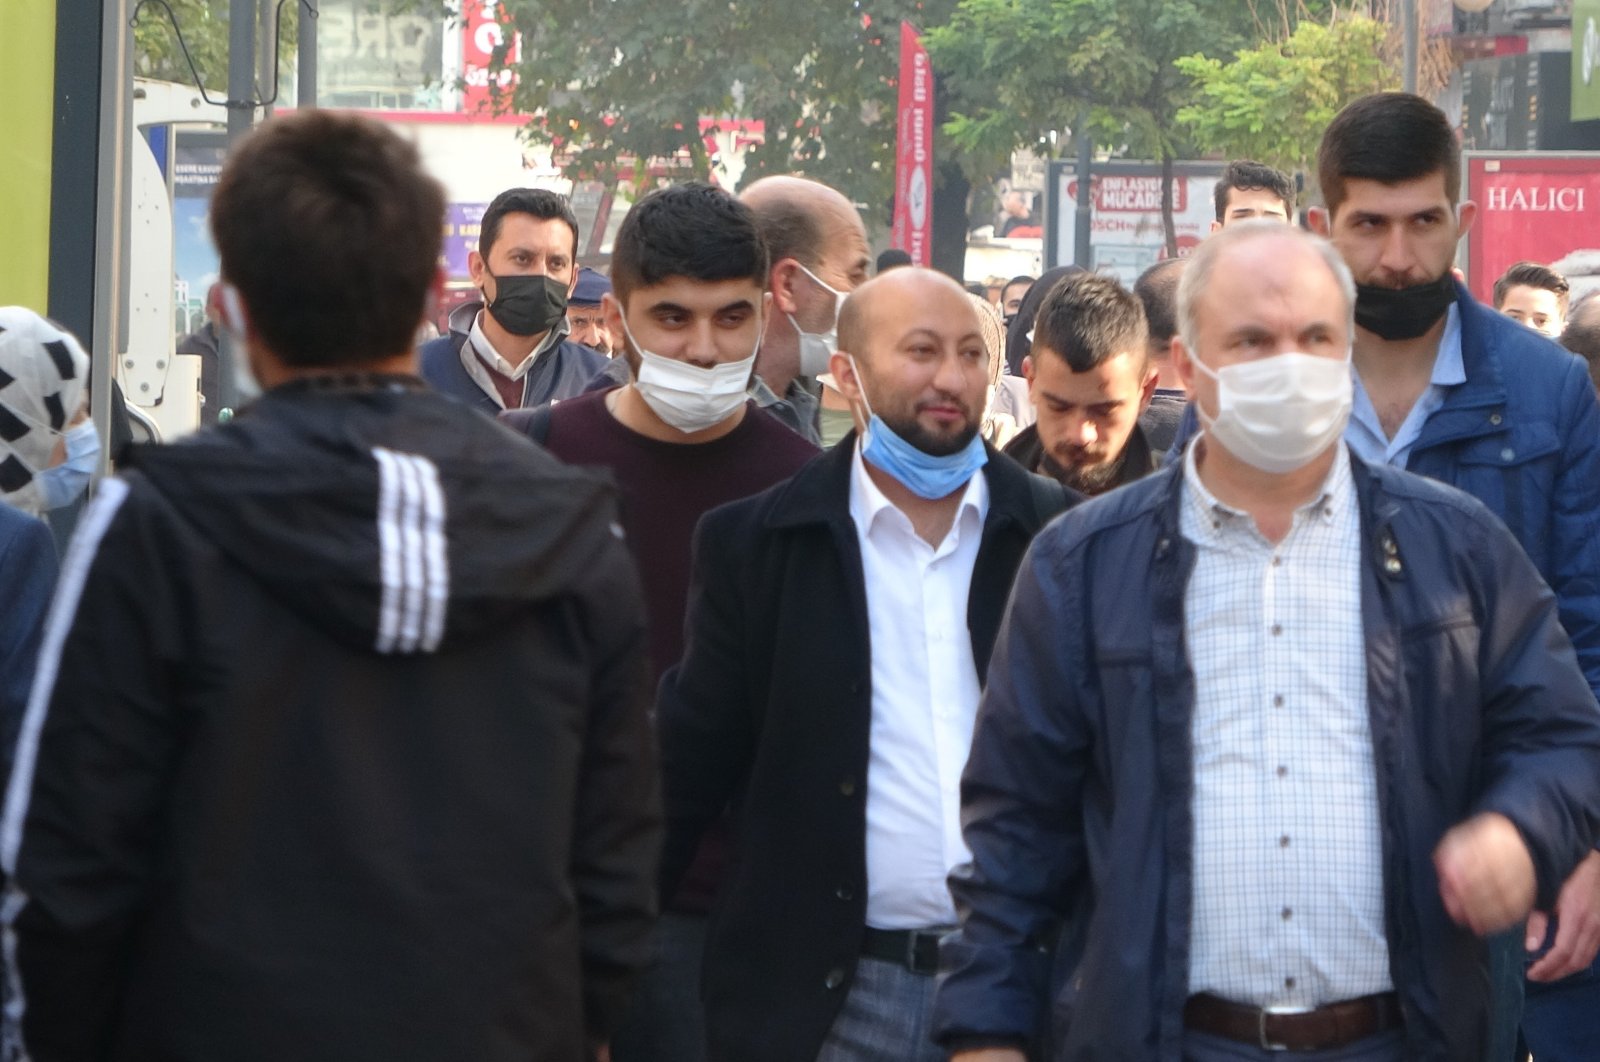 People wearing protective masks against COVID-19 walk on a street, in Karabük, northern Turkey, Nov. 21, 2021. (İHA PHOTO) 